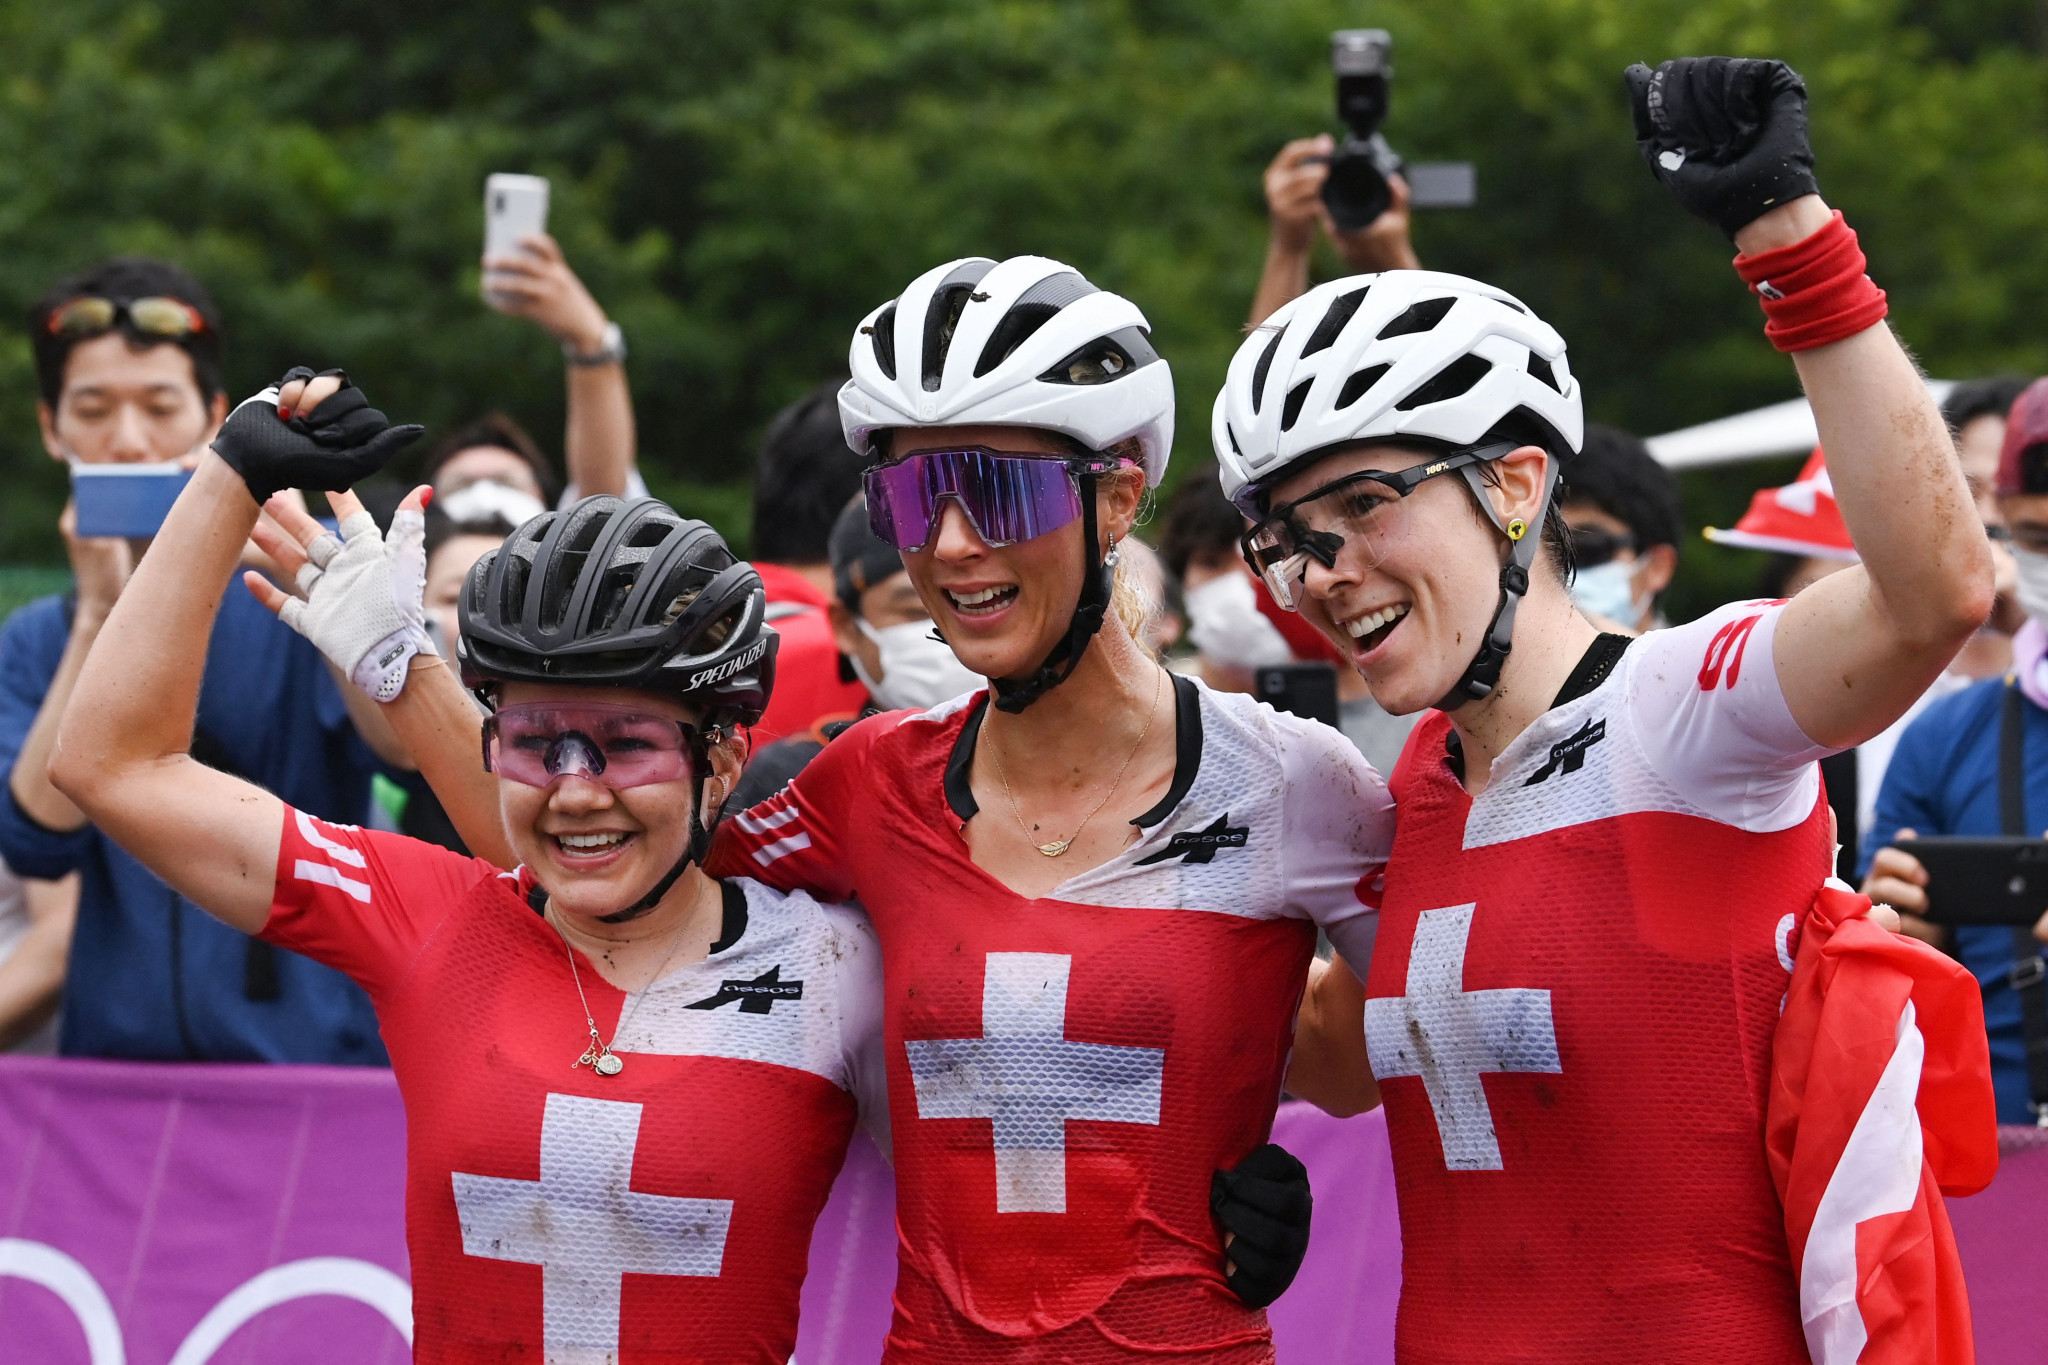 Neff leads Swiss clean sweep of women's Olympic mountain bike podium